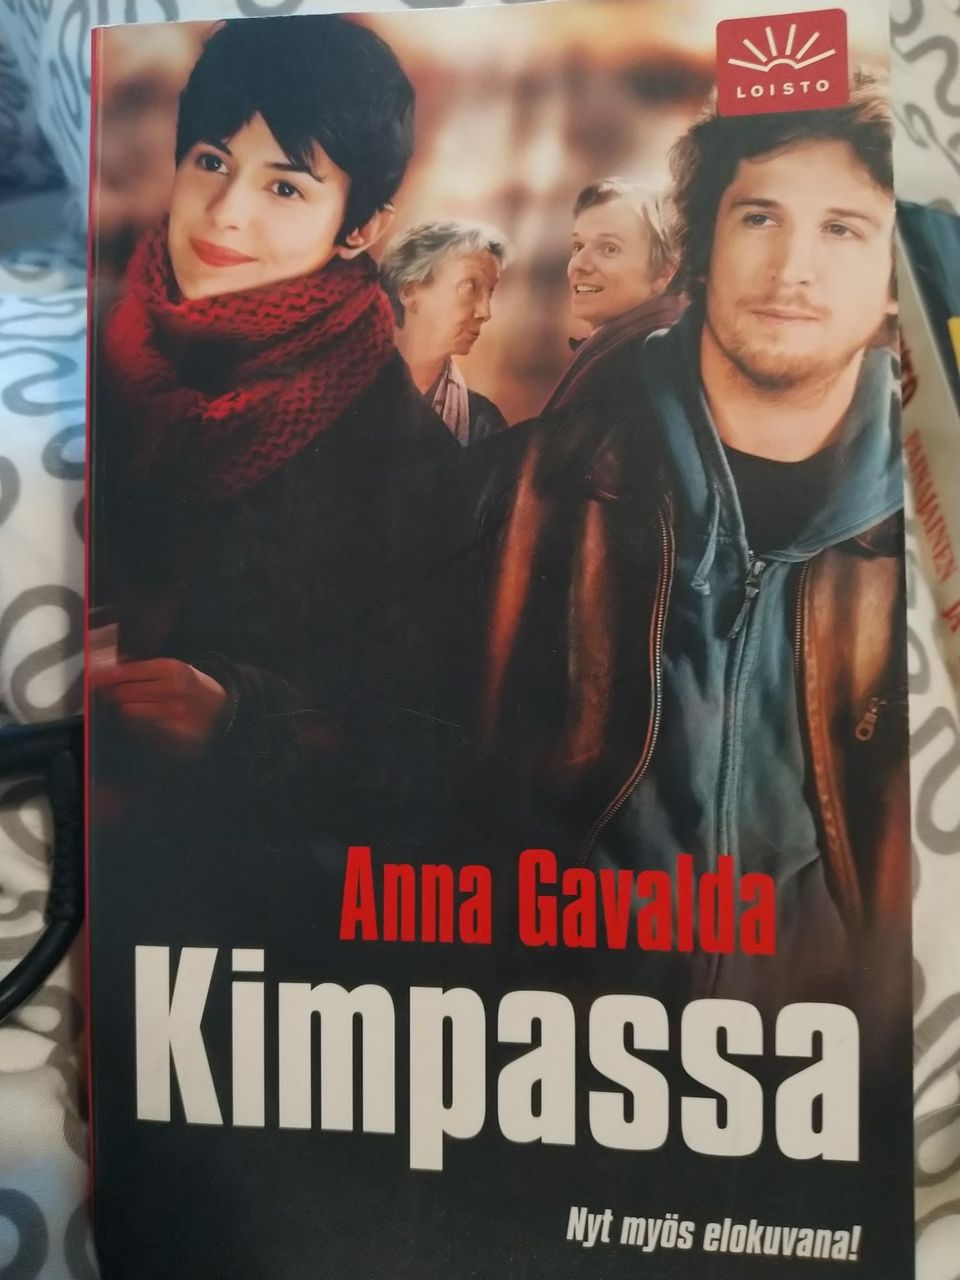 Kimpassa - Anna Gavalda